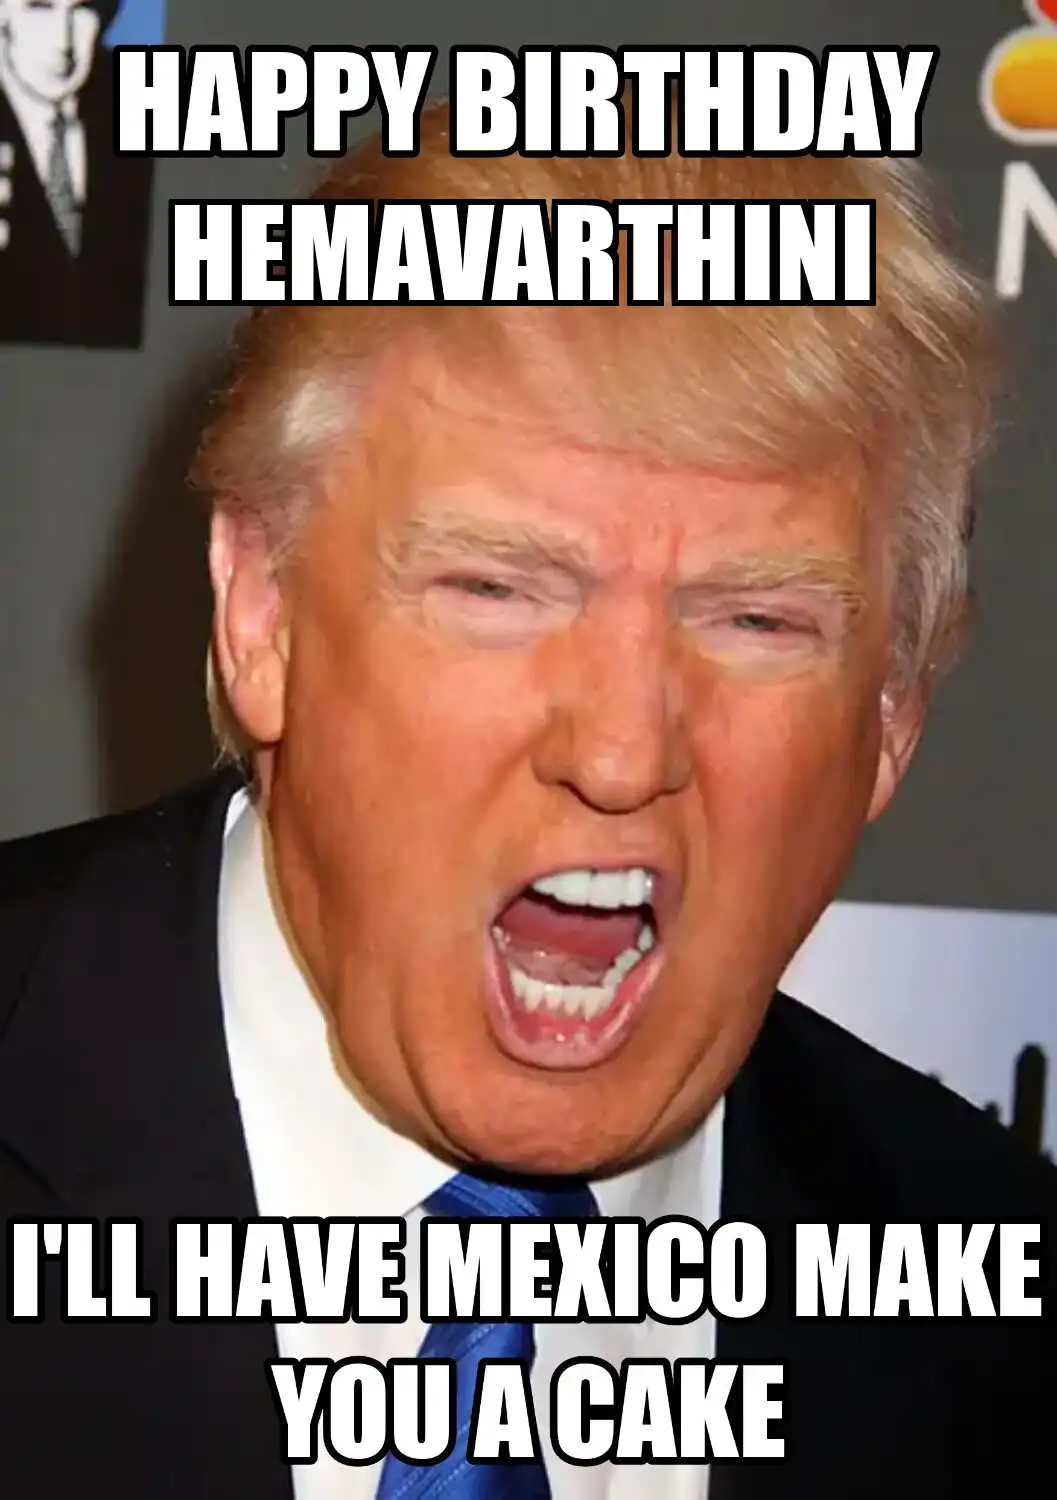 Happy Birthday Hemavarthini Mexico Make You A Cake Meme